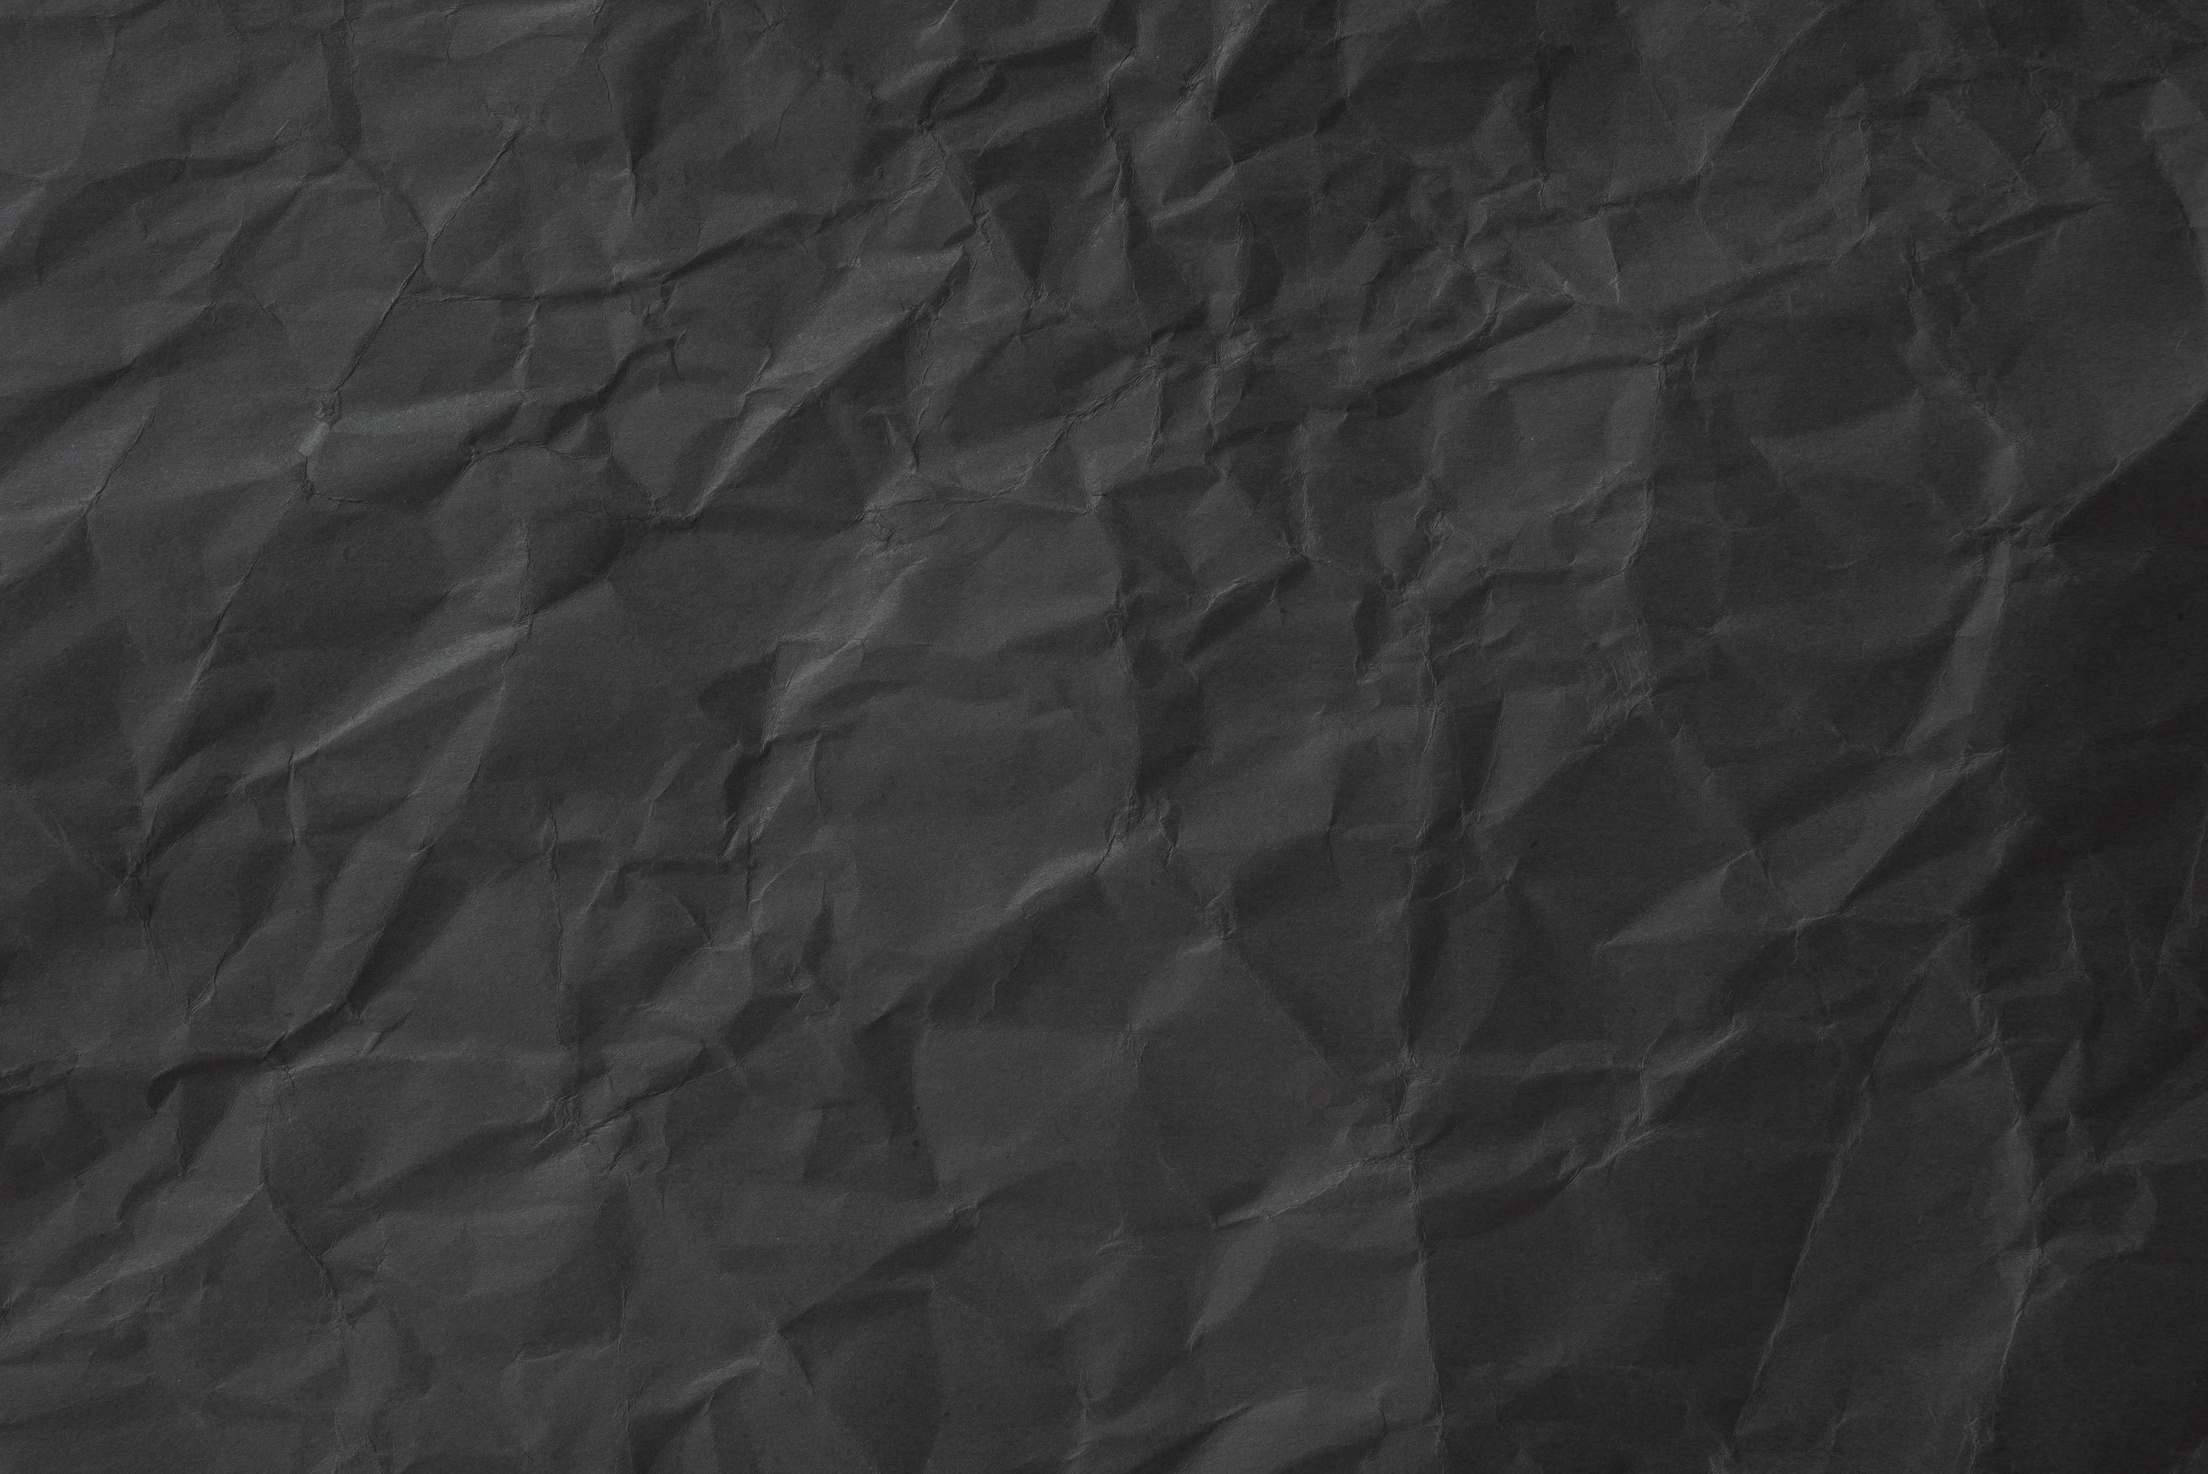 Black paper texture